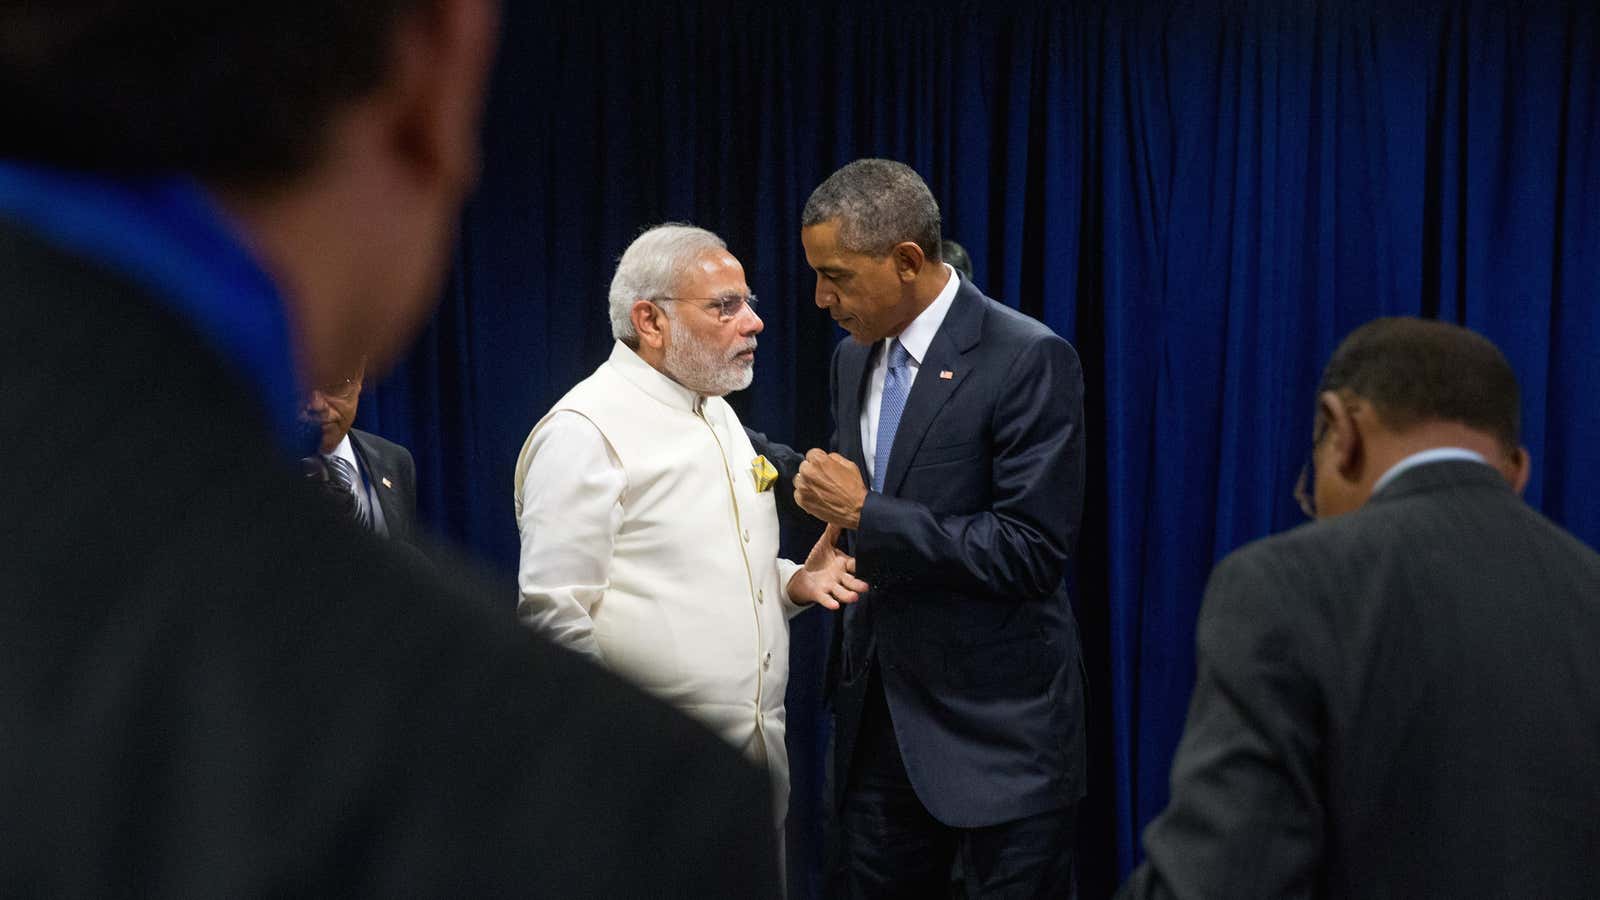 Barack Obama and Narendra Modi speak at United Nations headquarters in New York.